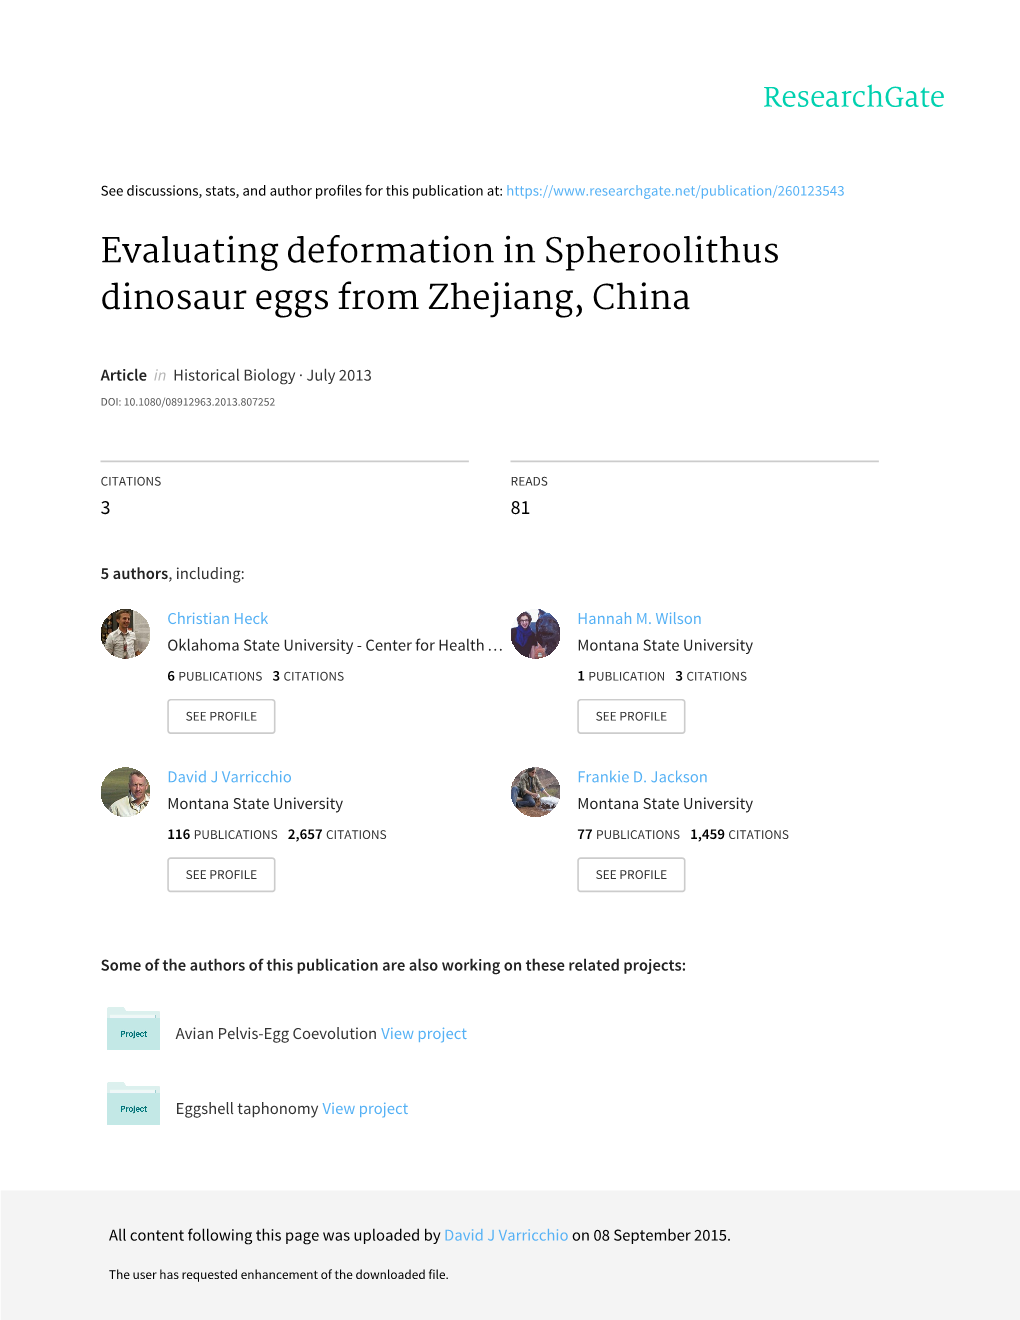 Evaluating Deformation in Spheroolithus Dinosaur Eggs from Zhejiang, China